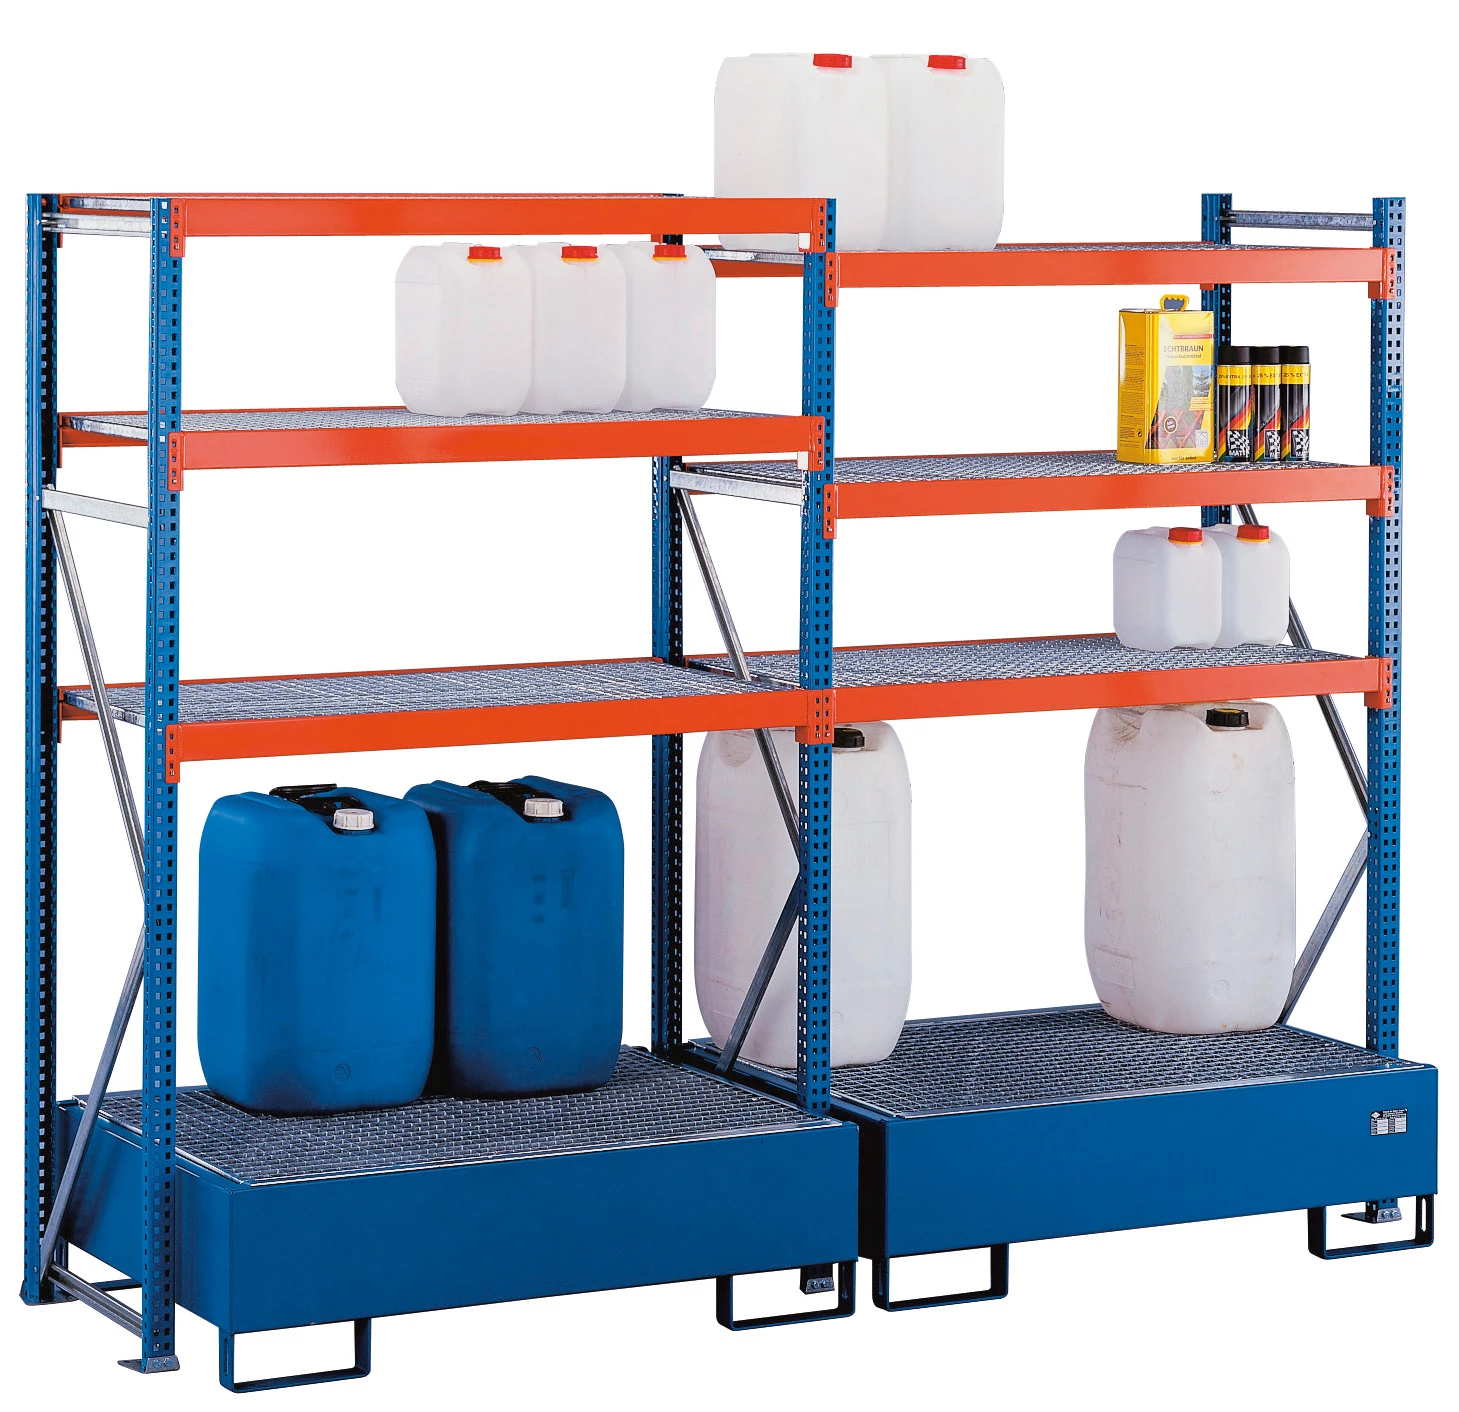 Schulte Umweltregal-Set W 100 | Anbauregal inkl. Auffangwanne | HxBxT 200x125x60cm | Blau/Orange/Verzinkt